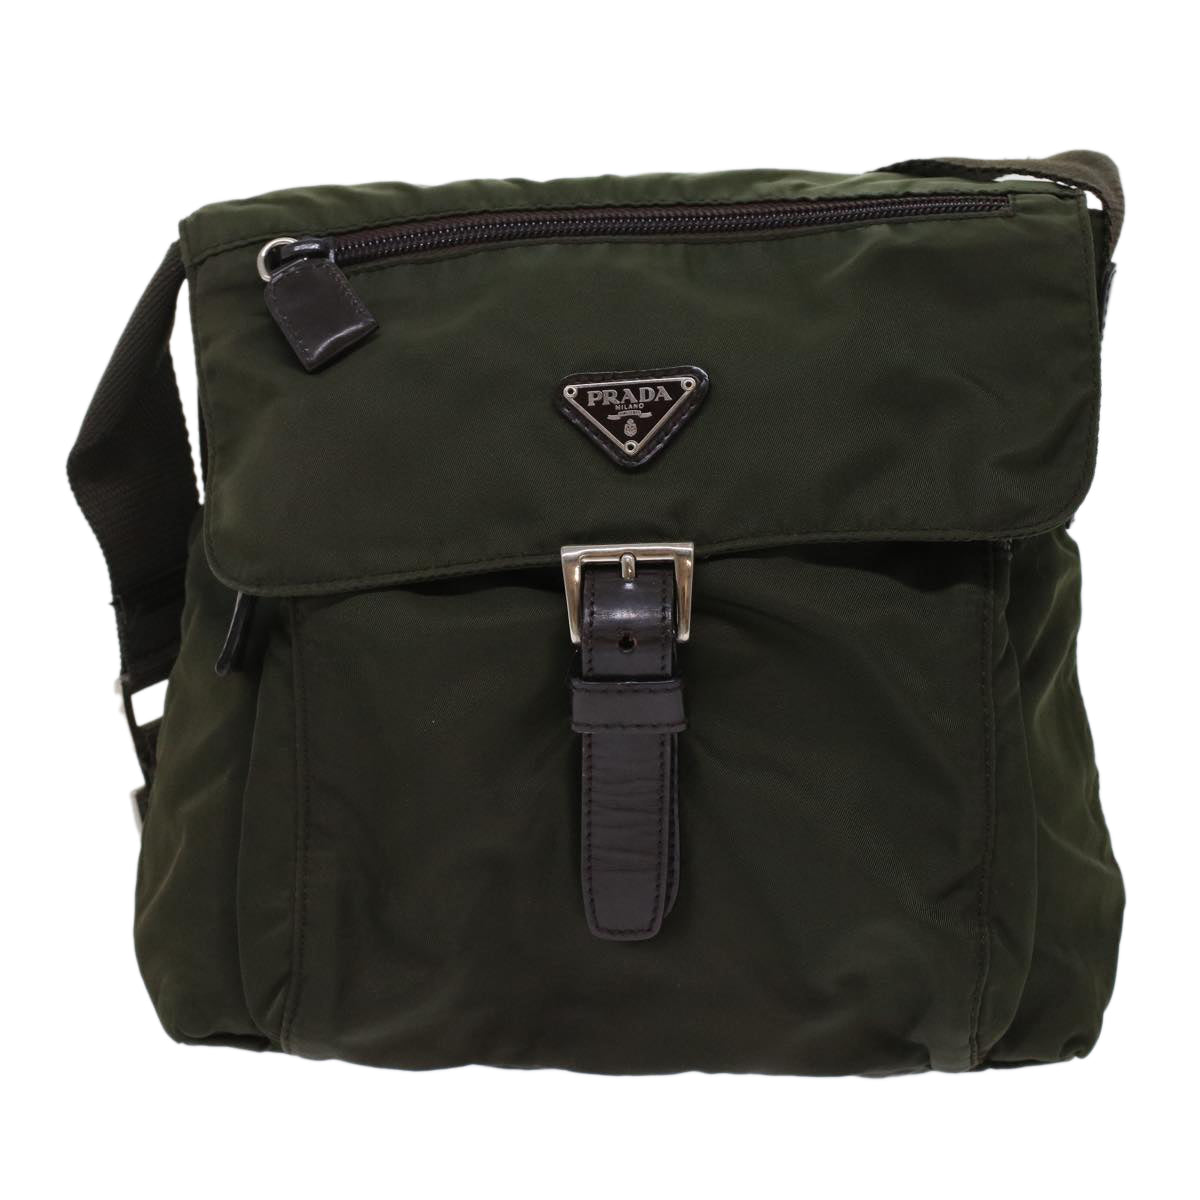 PRADA Shoulder Bag Nylon Khaki Auth 49412